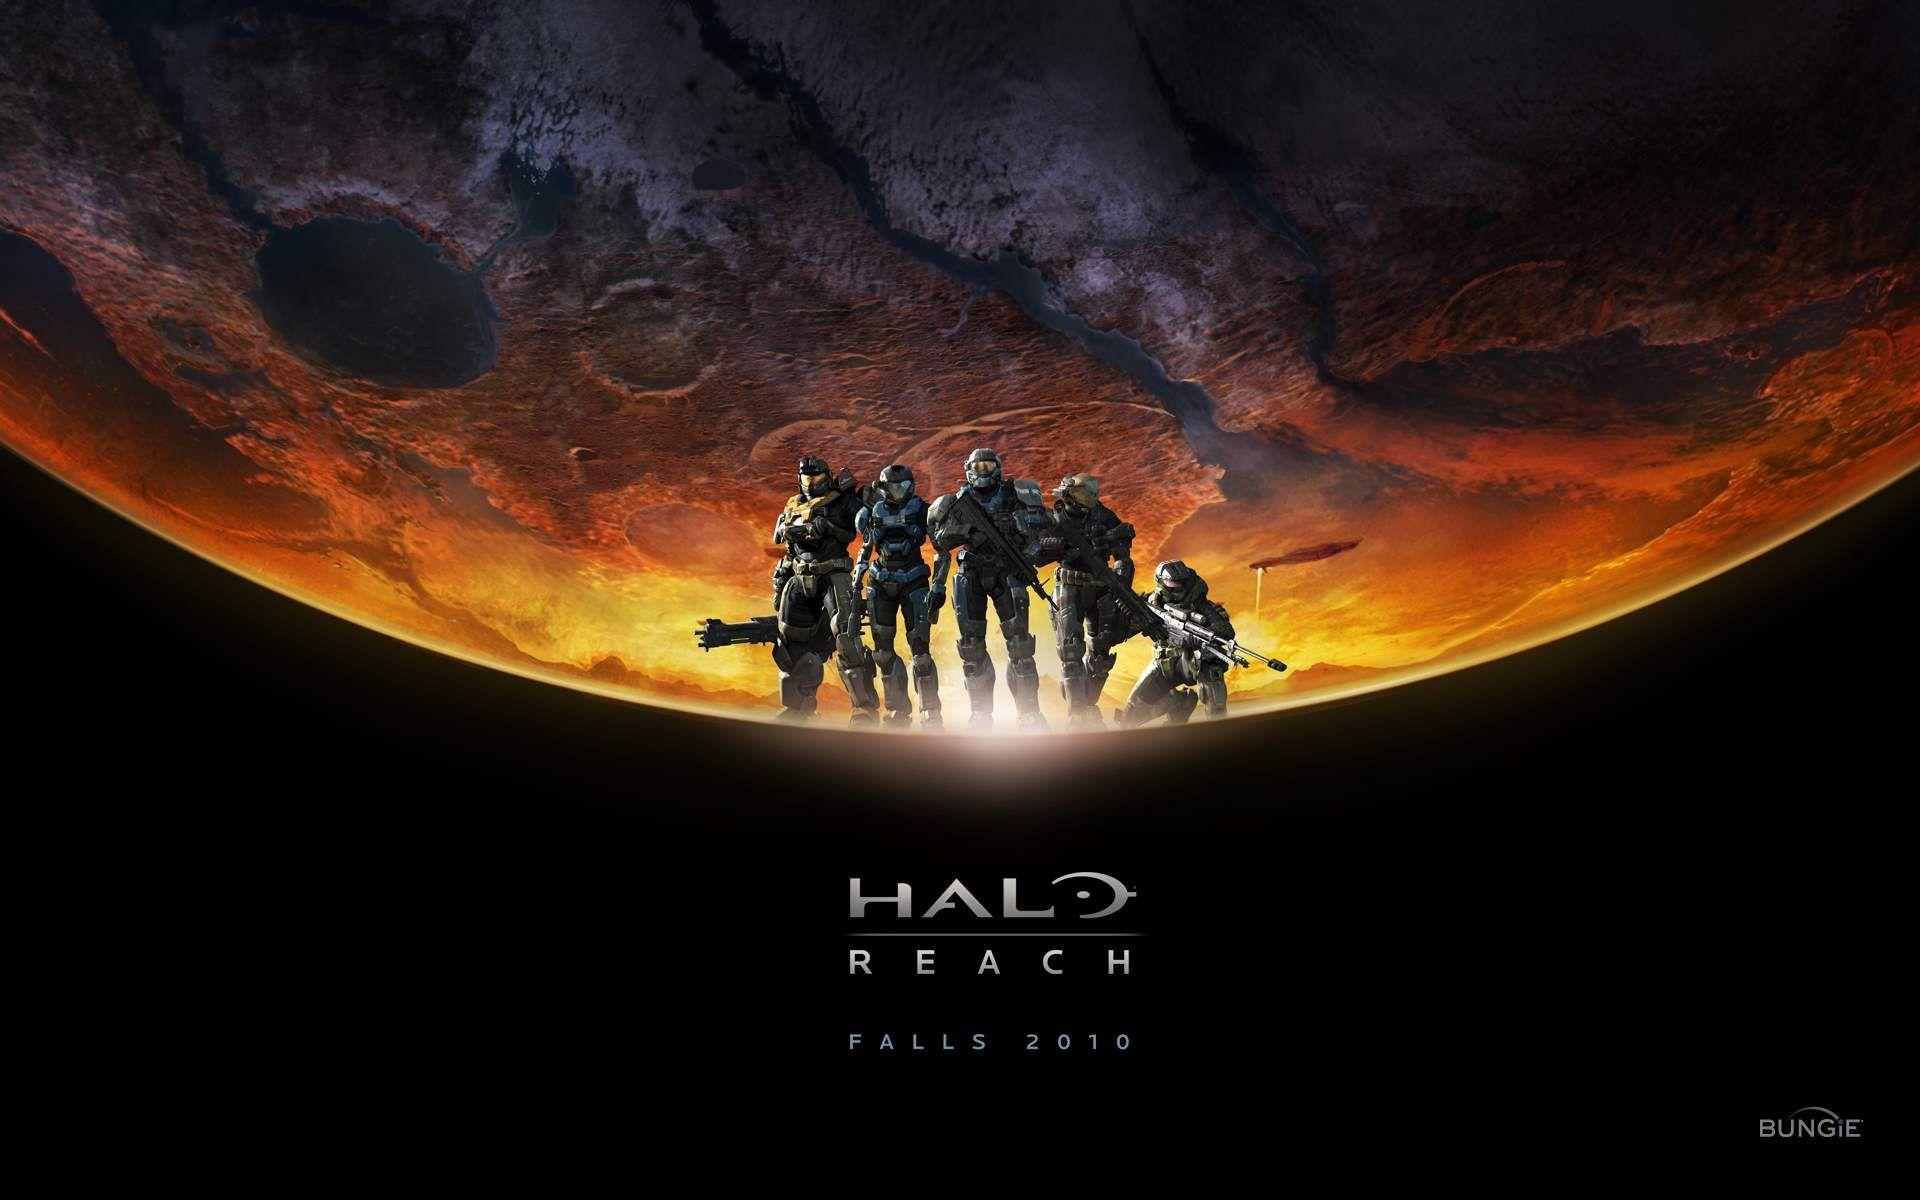 Halo Reach Wallpaper HD. Halo reach, Halo, Halo poster